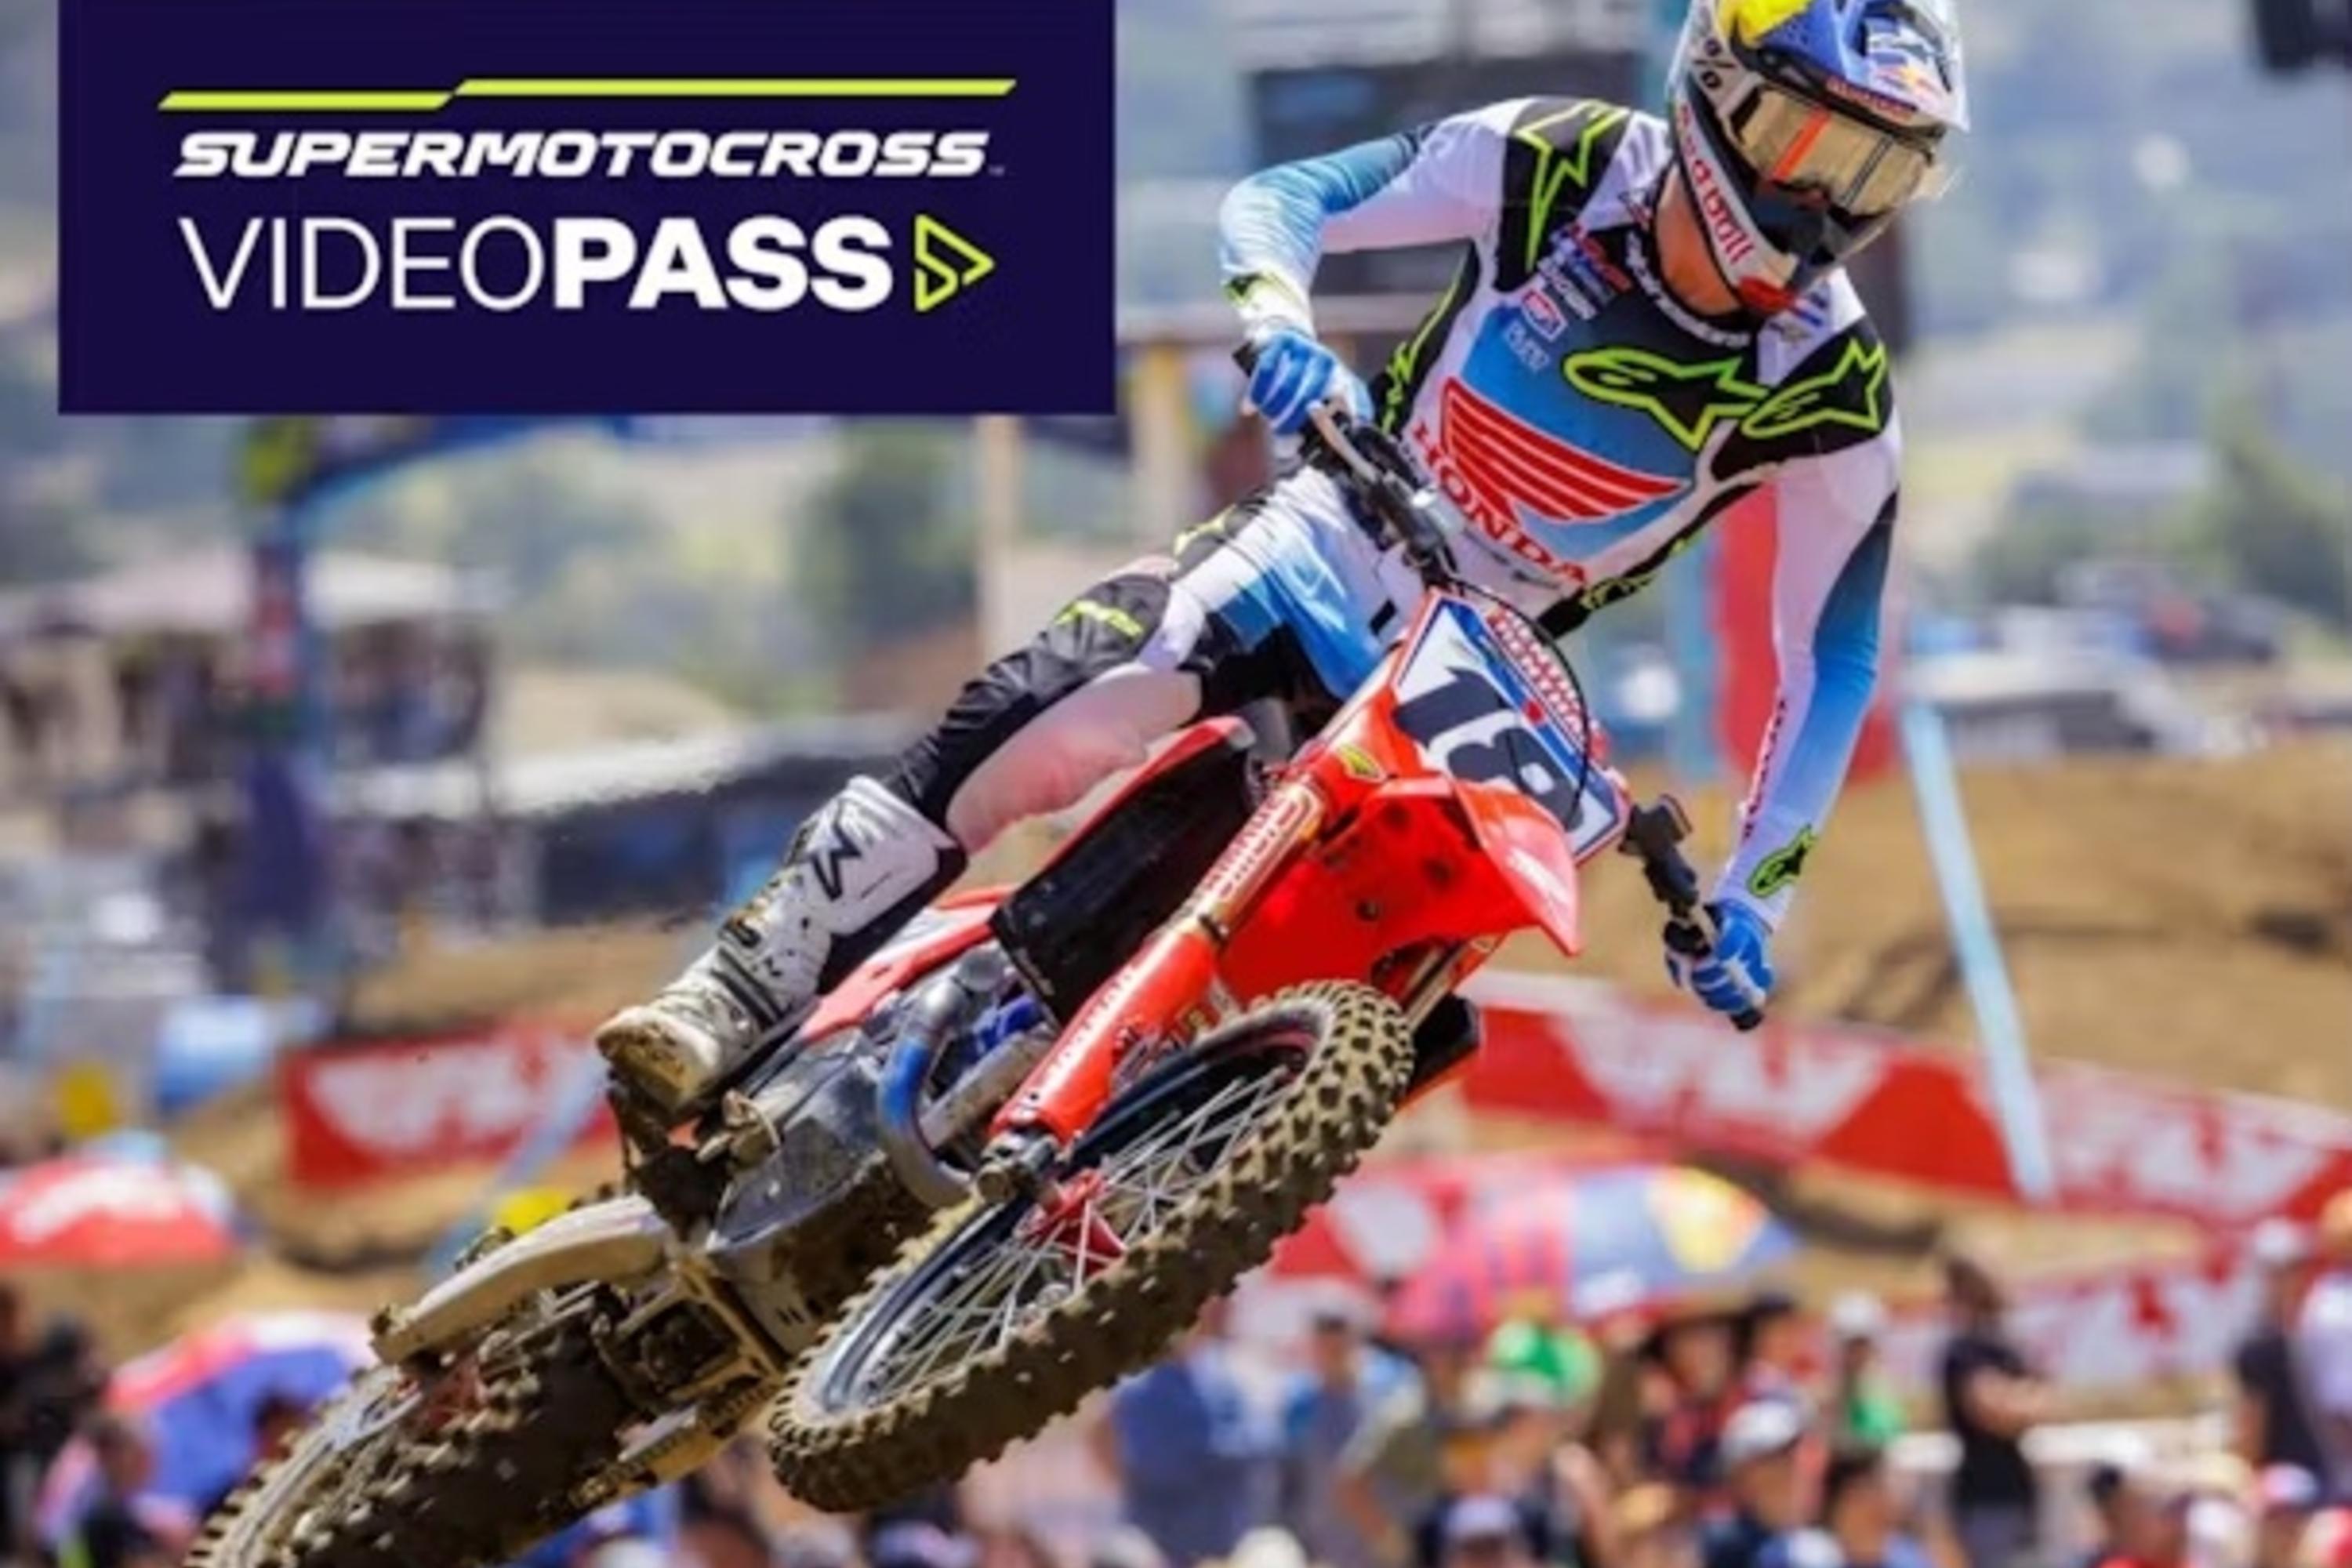 Pro Motocross (@ProMotocross) / X